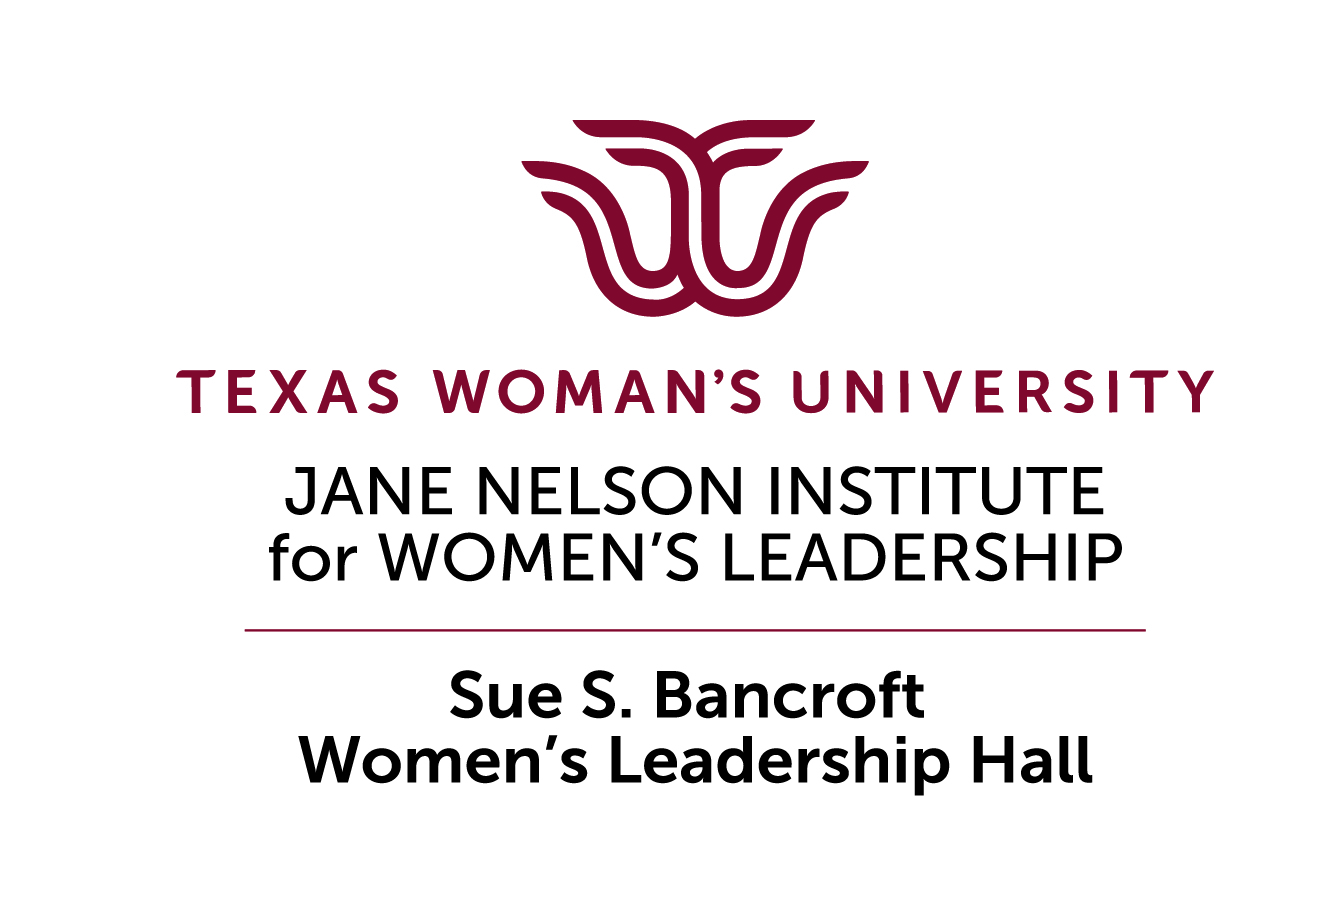 Sue S. Bancroft Women's Leadership Hall